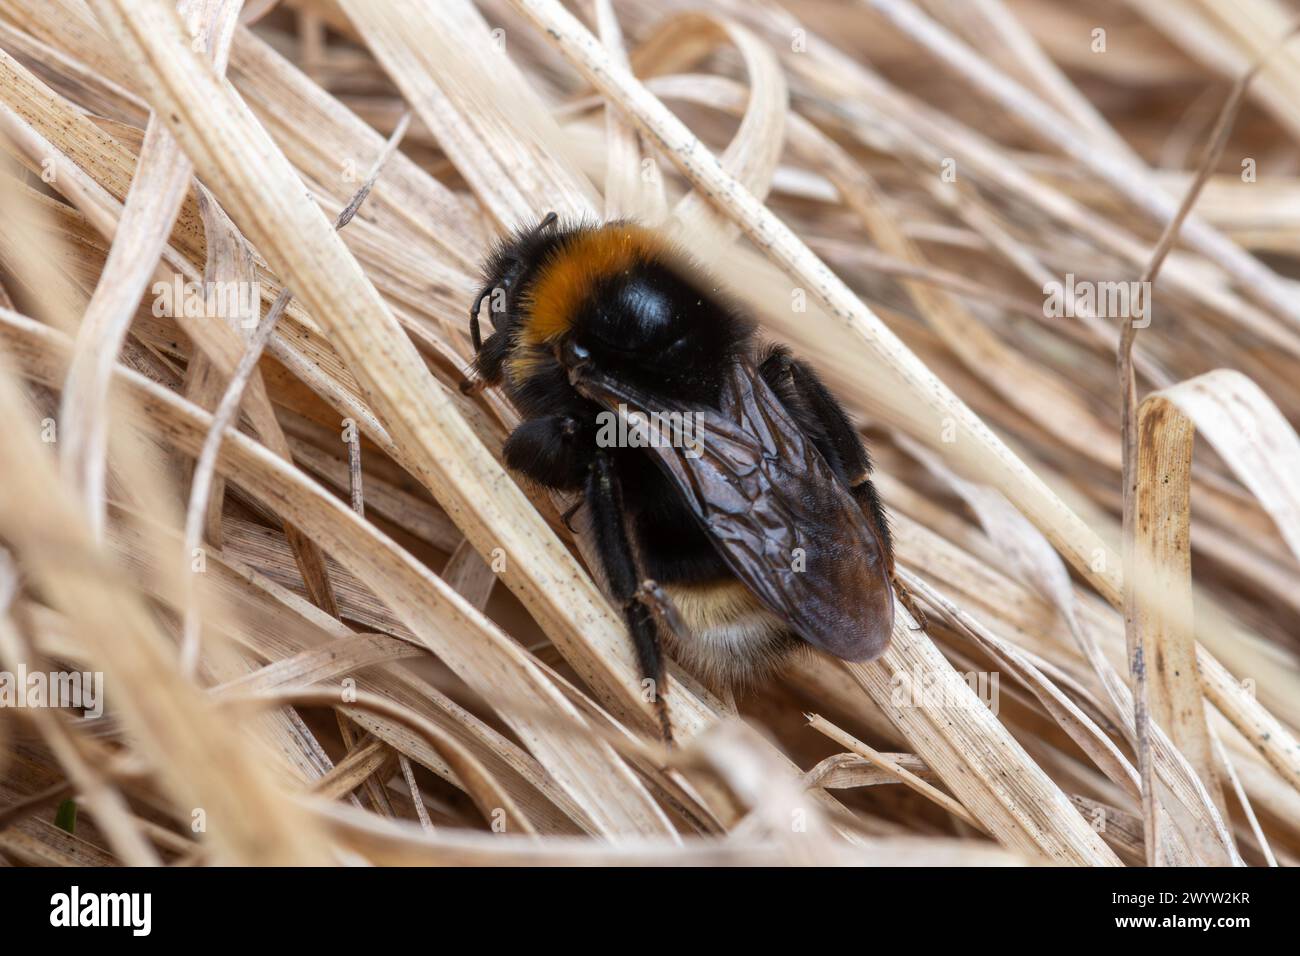 Southern cuckoo bumblebee (Bombus vestalis), Hampshire, England, UK, during April or spring Stock Photo